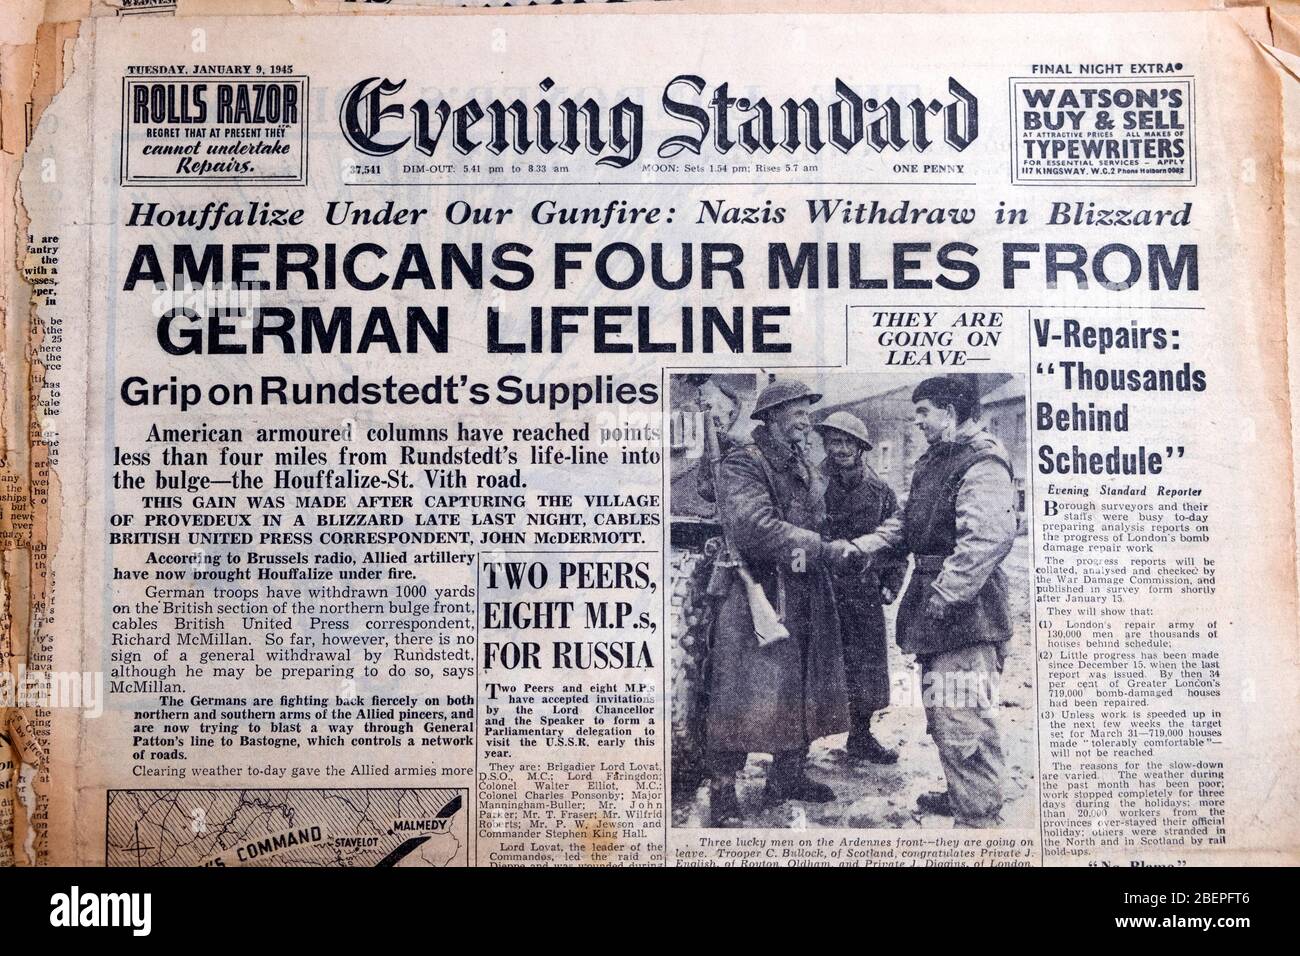 Evening Standard Wwii British Newspaper Headline 9 January 1945 Americans Four Miles From German Lifeline London England Uk Stock Photo Alamy